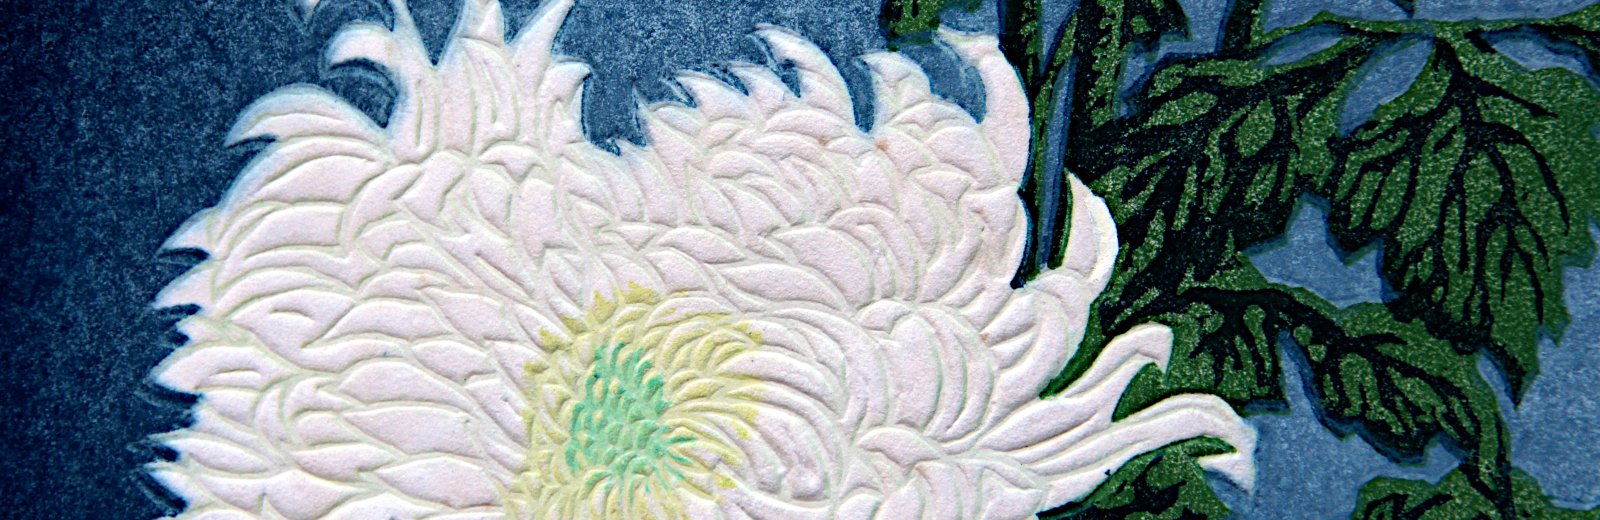 Chrysanthemen Nahaufnahme